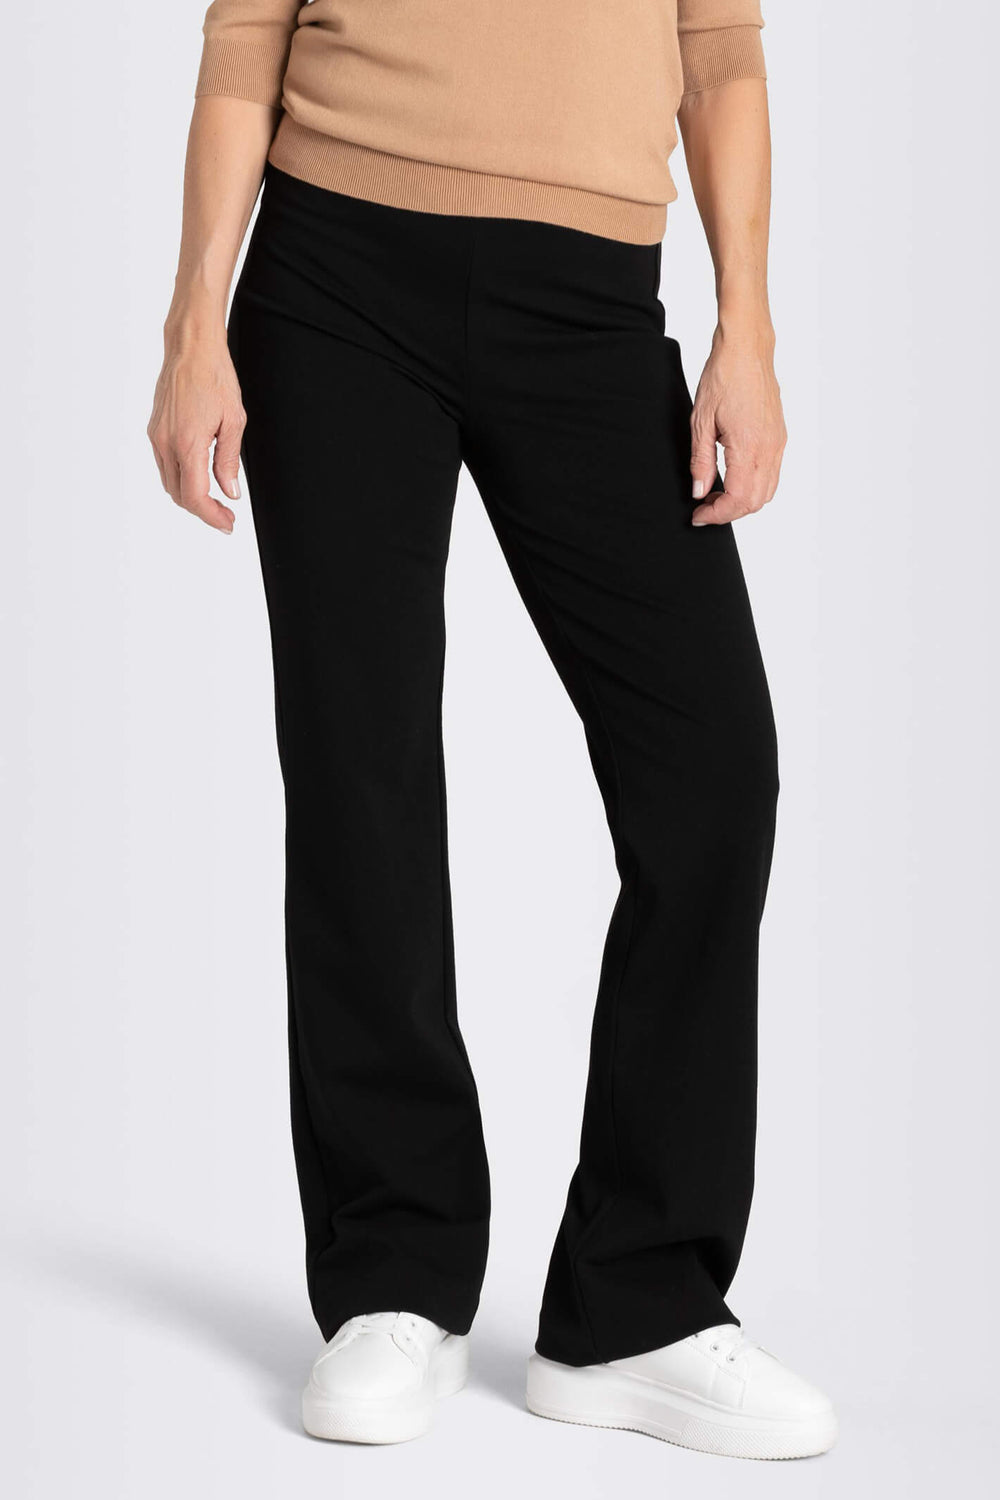 Mac 5219-00-0107L Flare Black Jeans 30 Inches - Olivia Grace Fashion